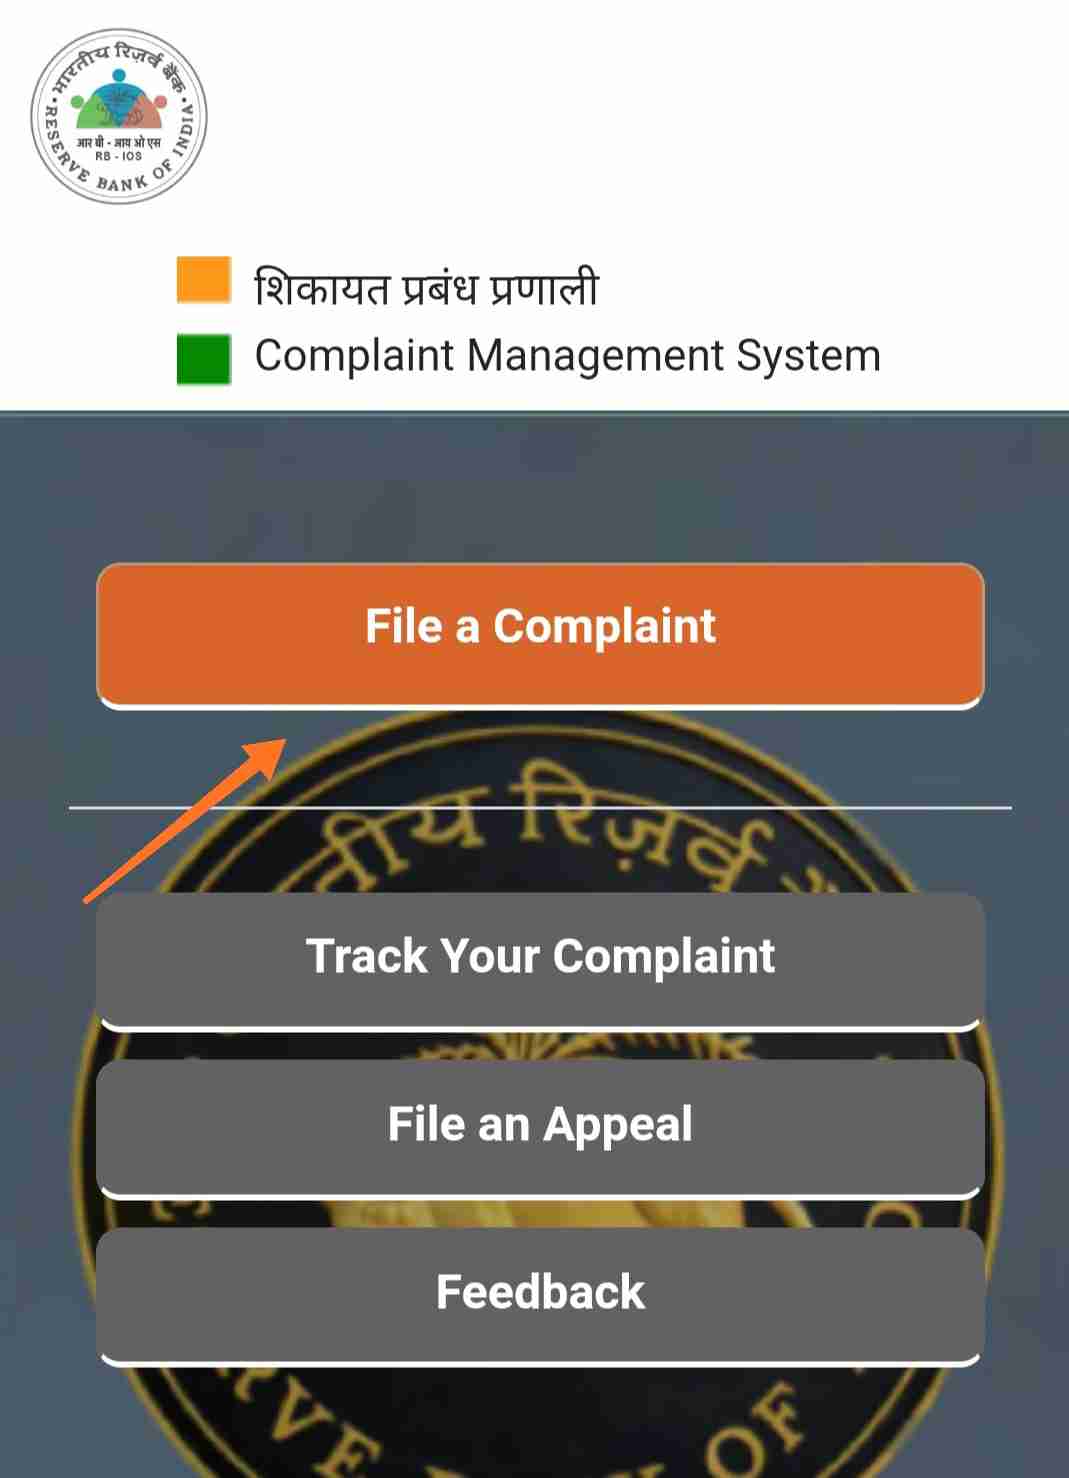 Rbi file a complaint